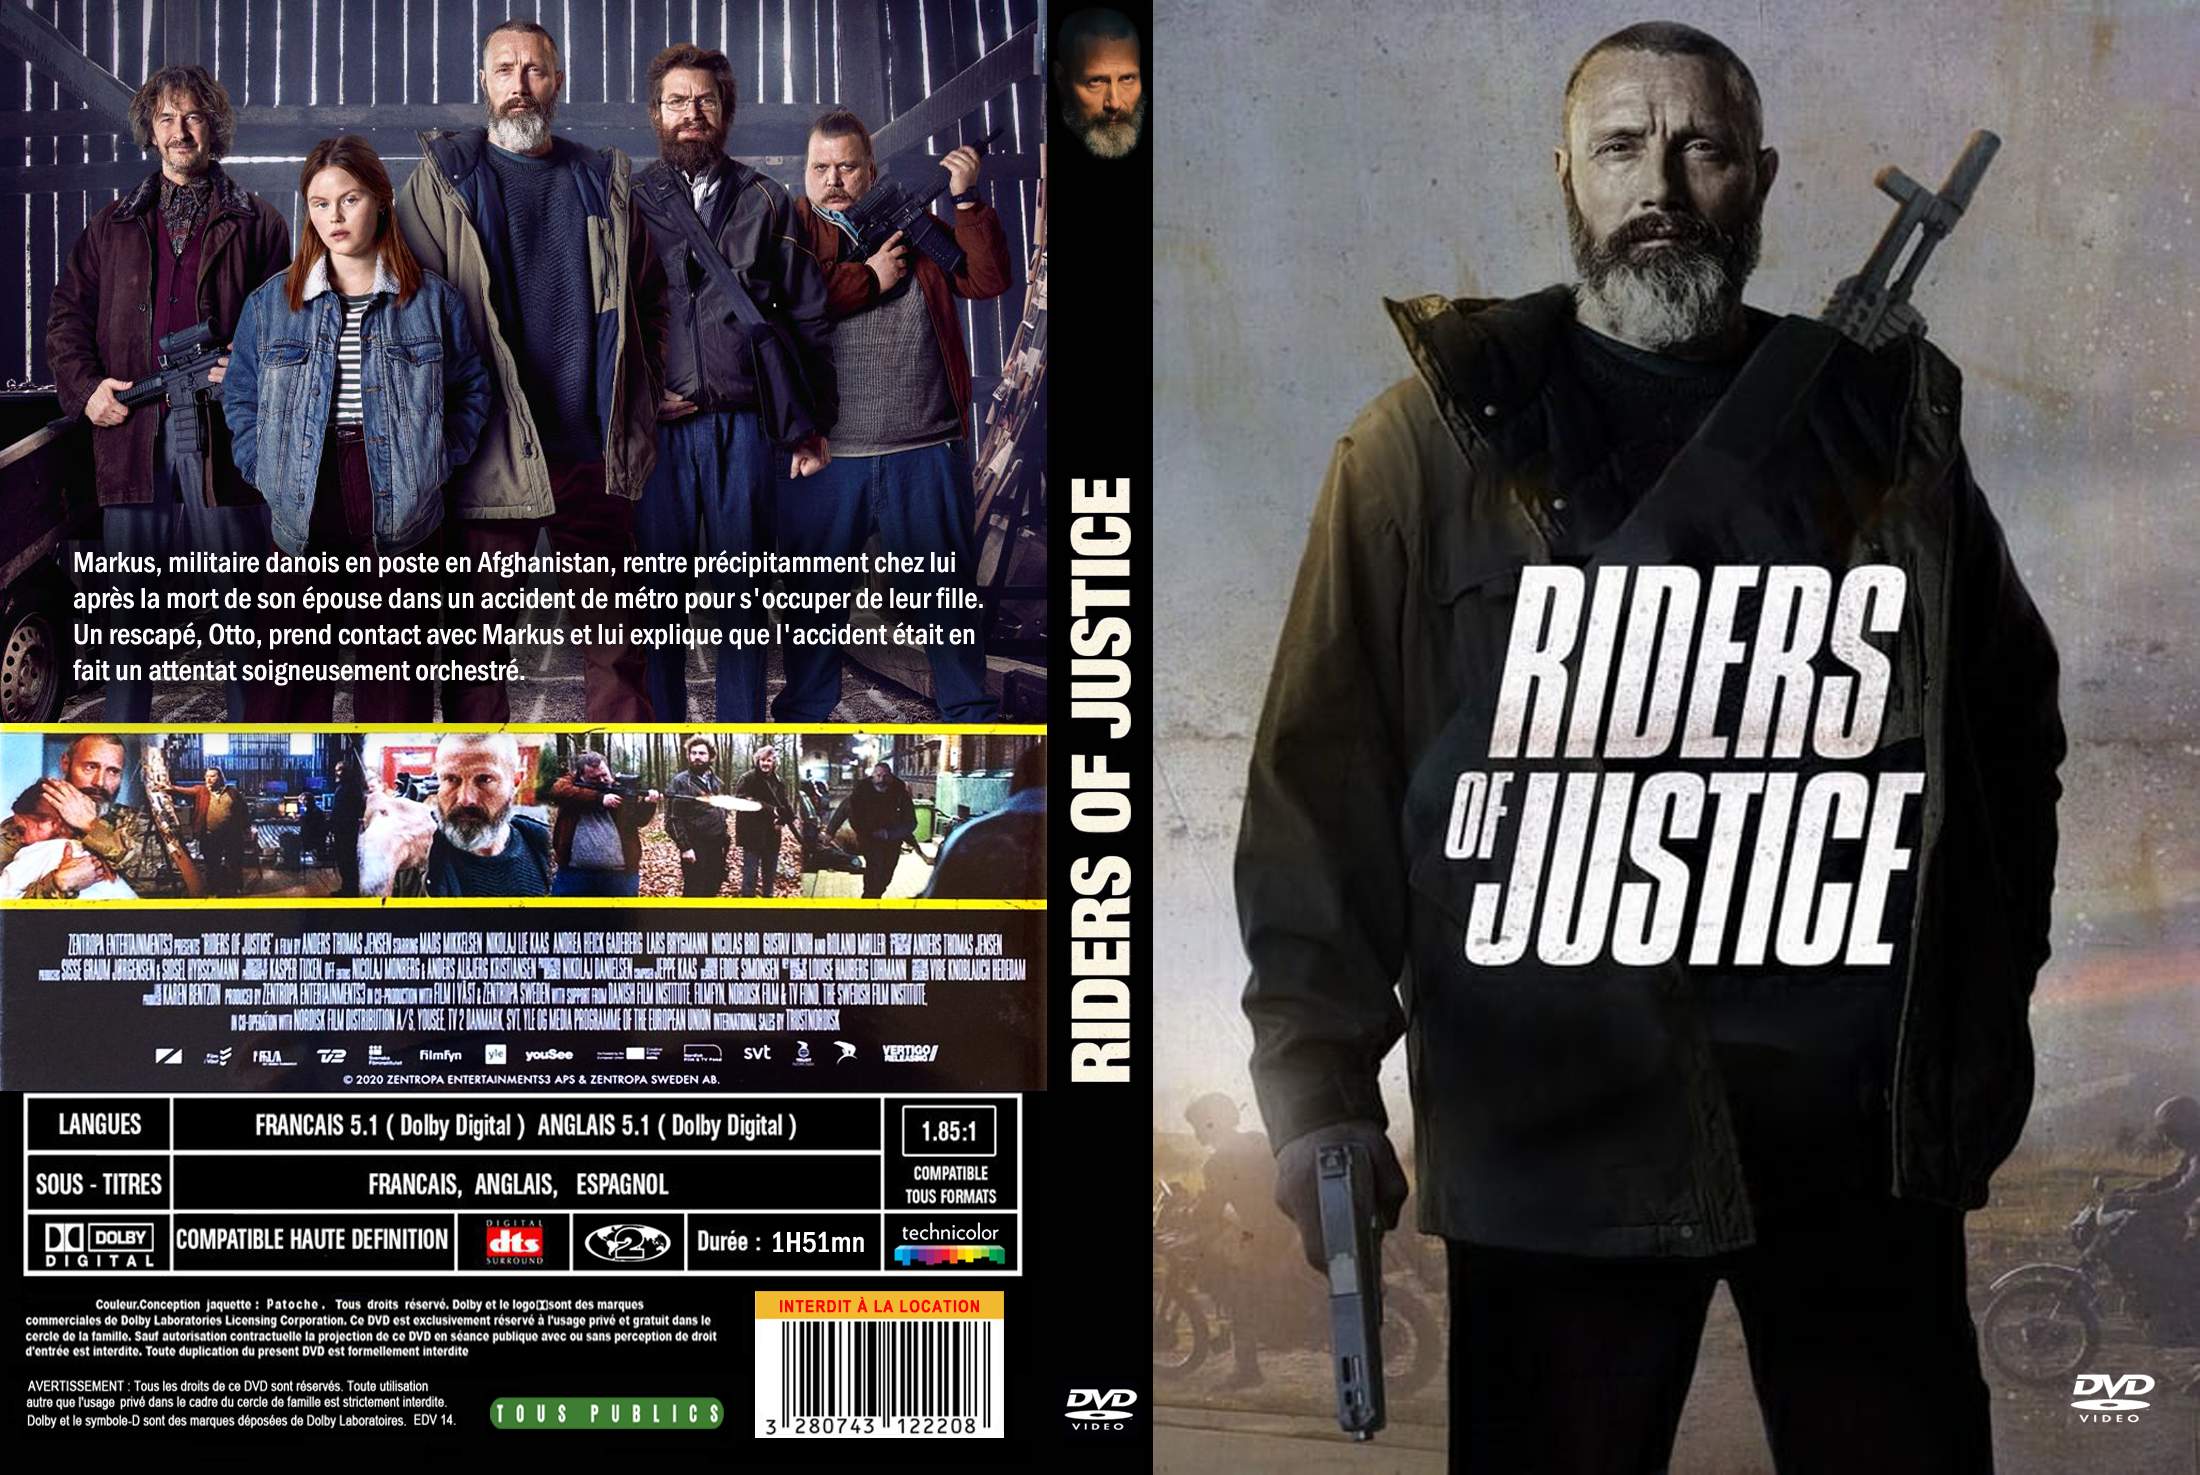 Jaquette DVD Riders of Justice custom